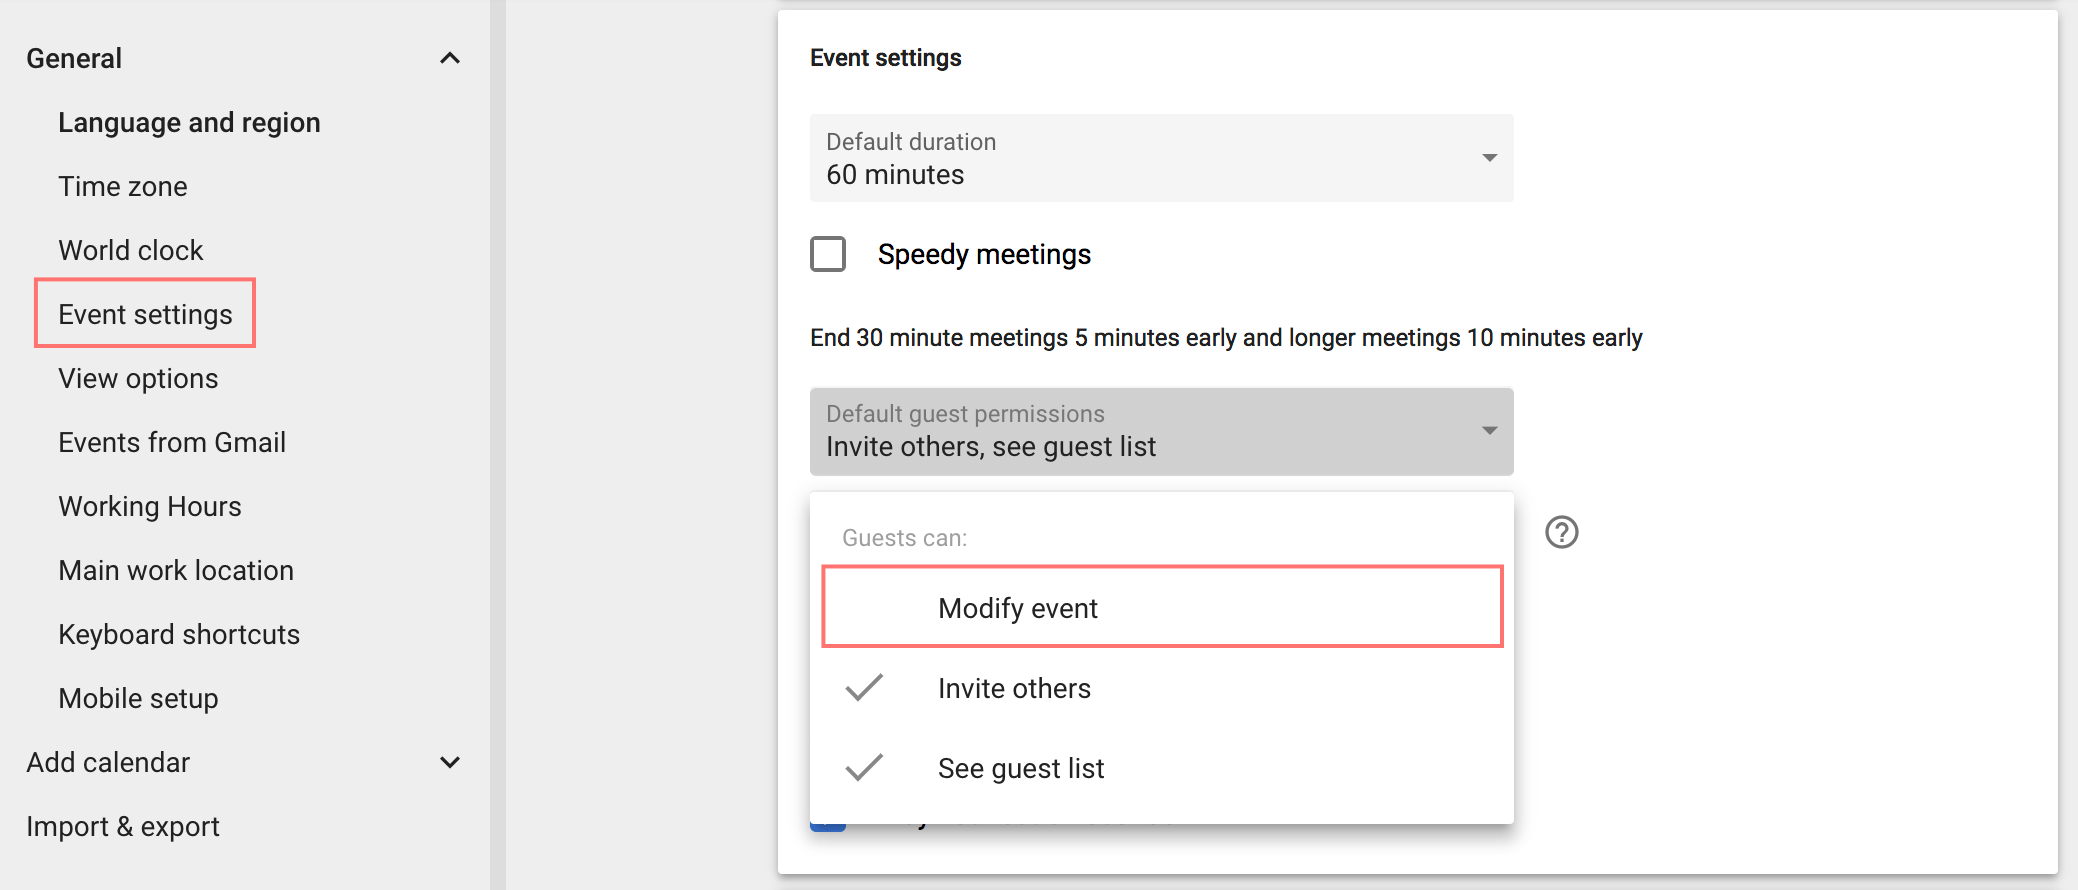 Google Calendar - Guests can modify events setting